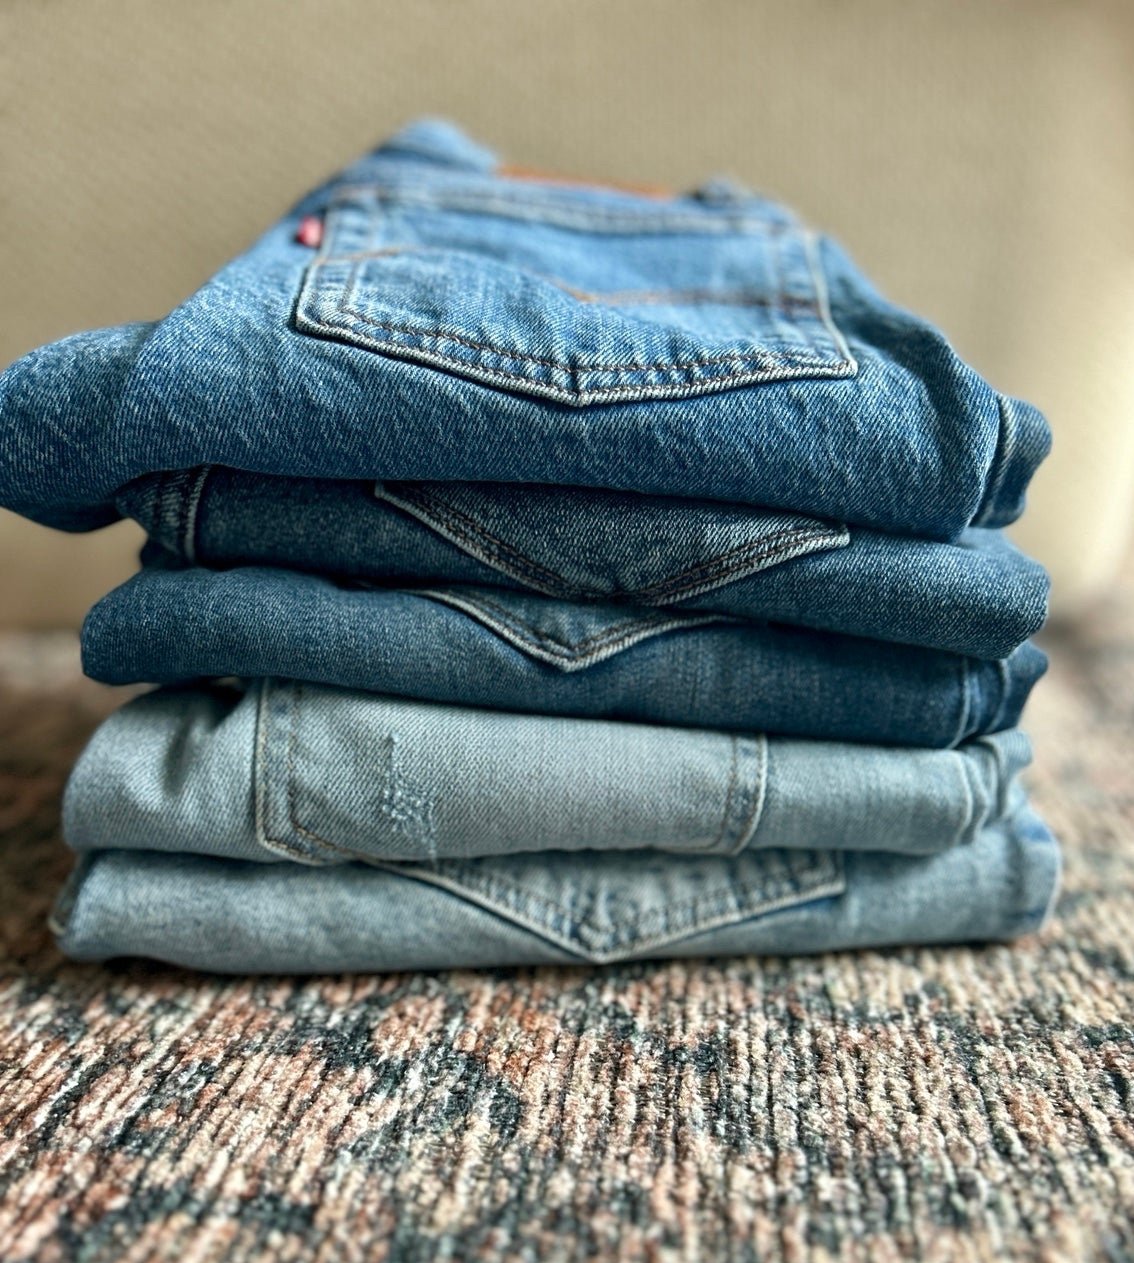 Stylish Bundle of 5 pairs of women’s jeans GK5RhtHKD Co